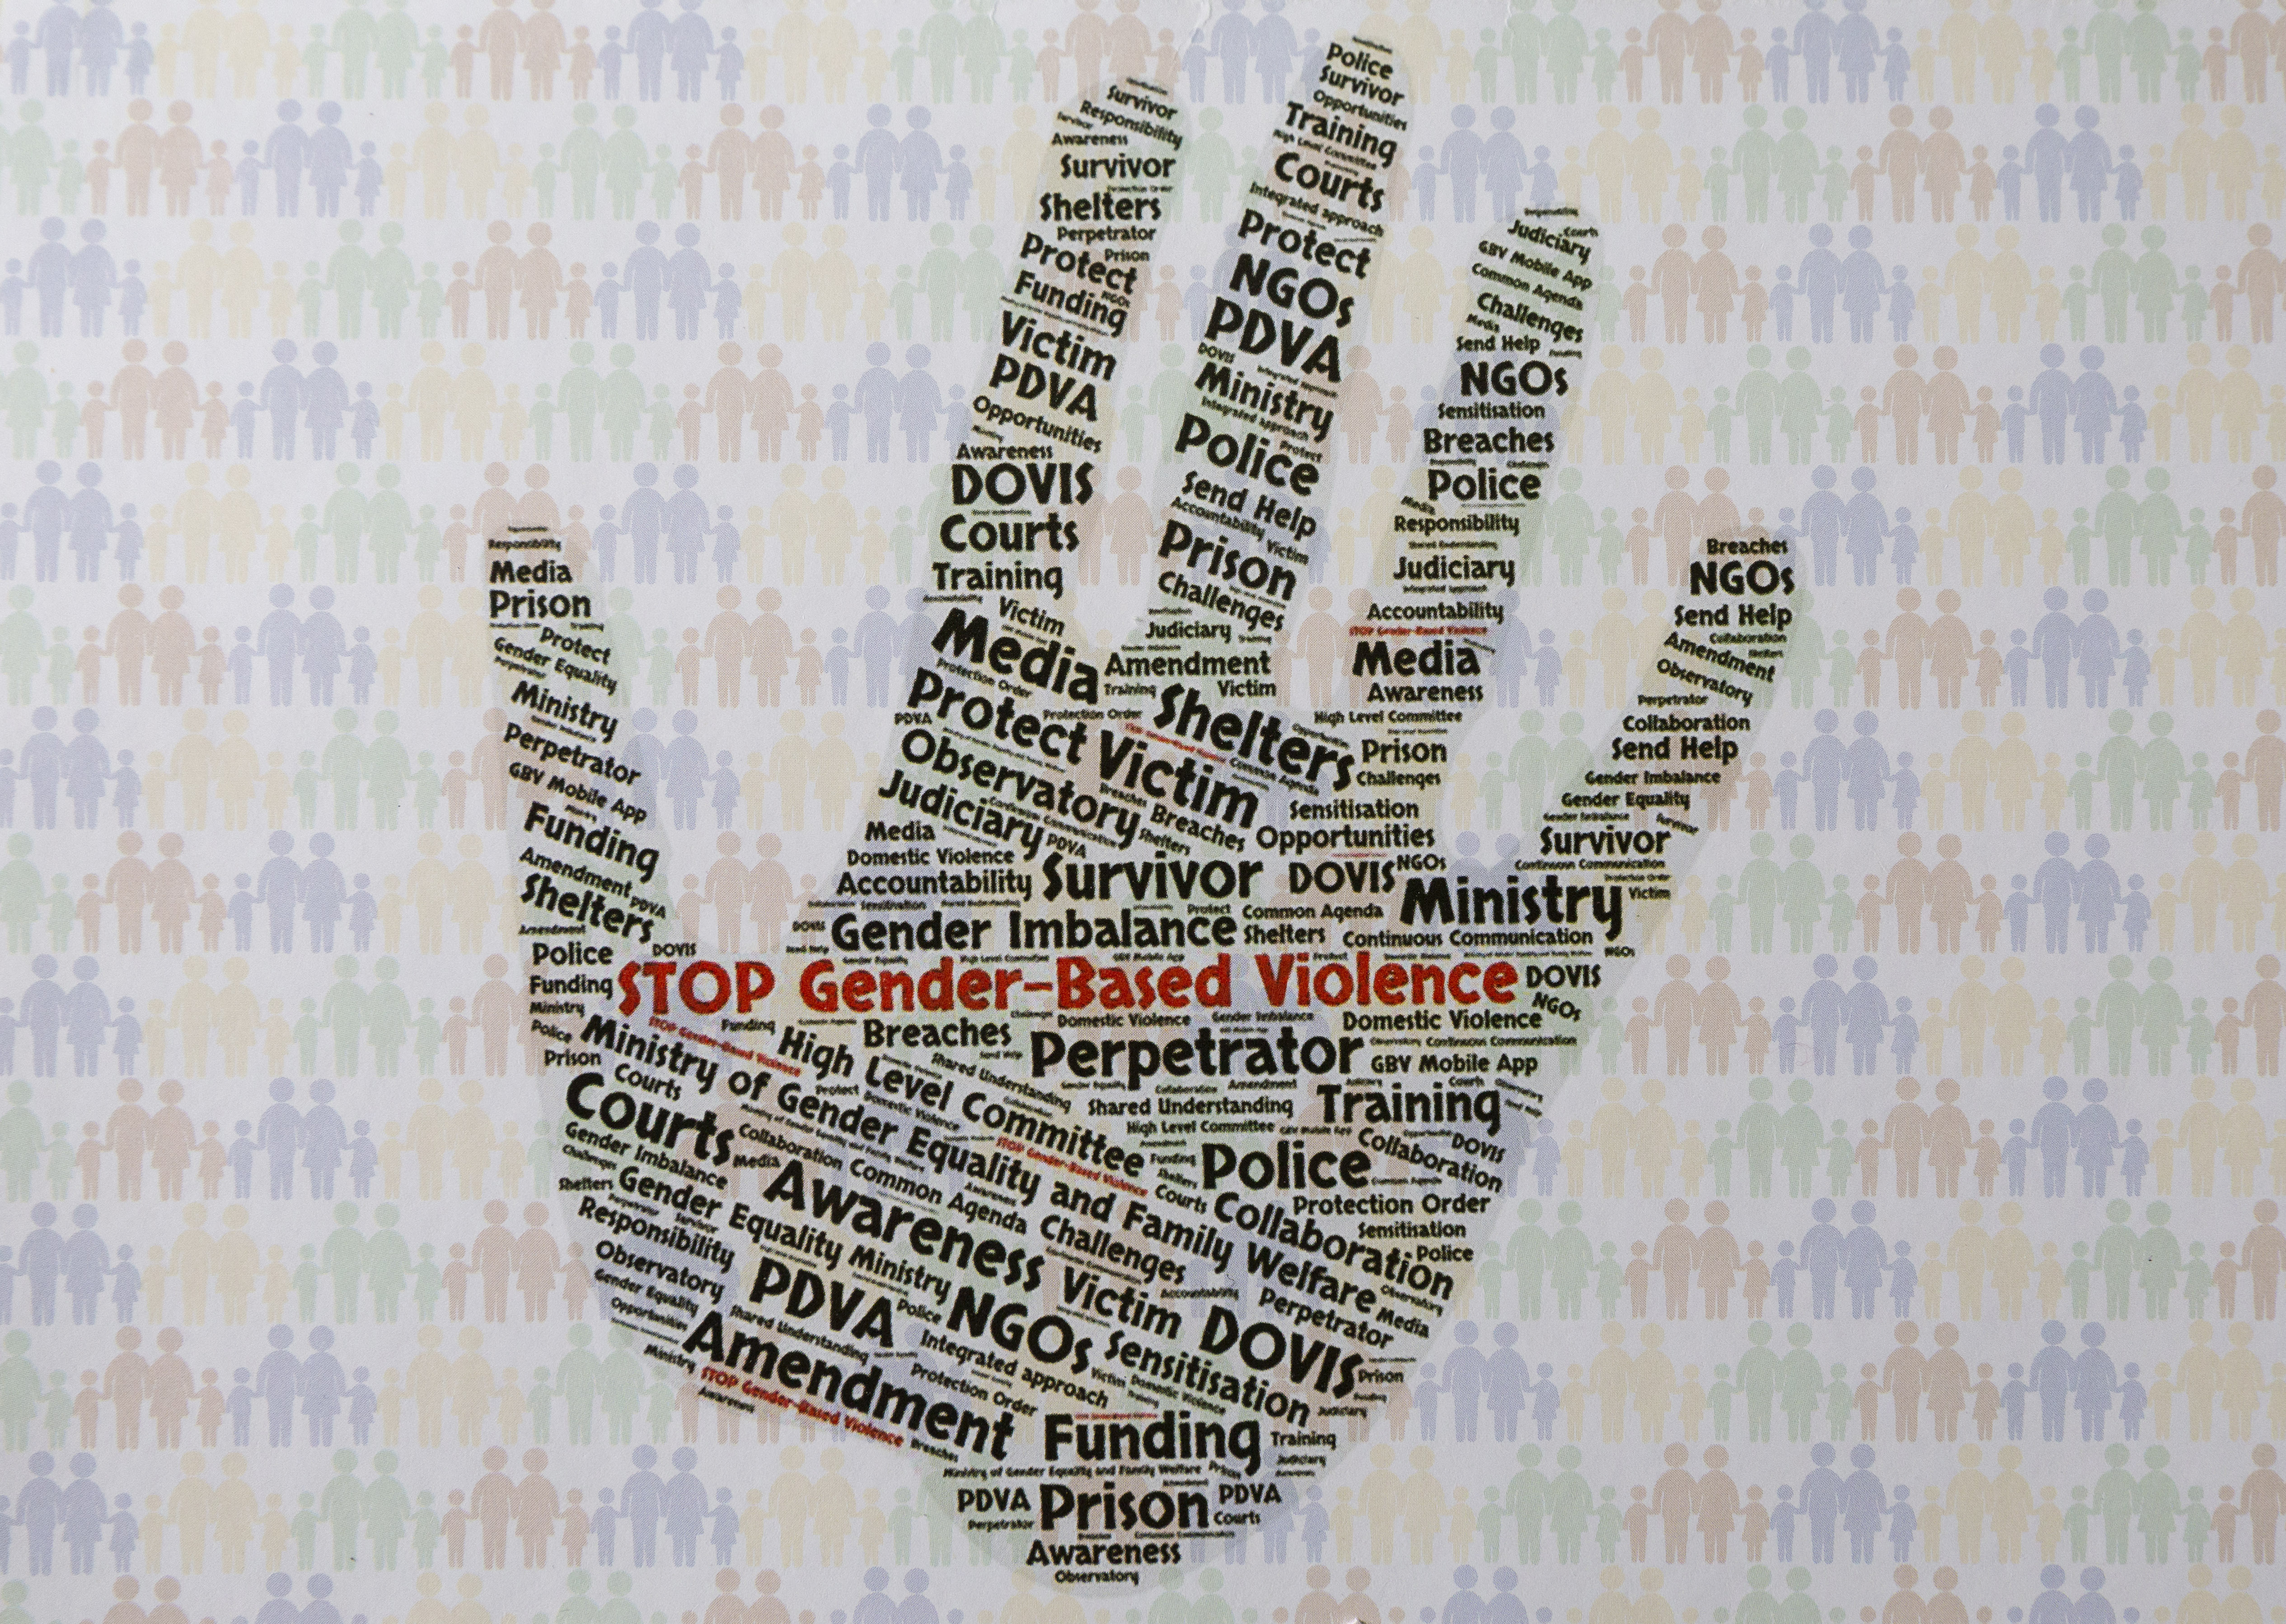 Hand shaped word cloud from https://www.undp.org/sites/g/files/zskgke326/files/migration/mu/undp-mru-stop-gender-based-violence.jpg